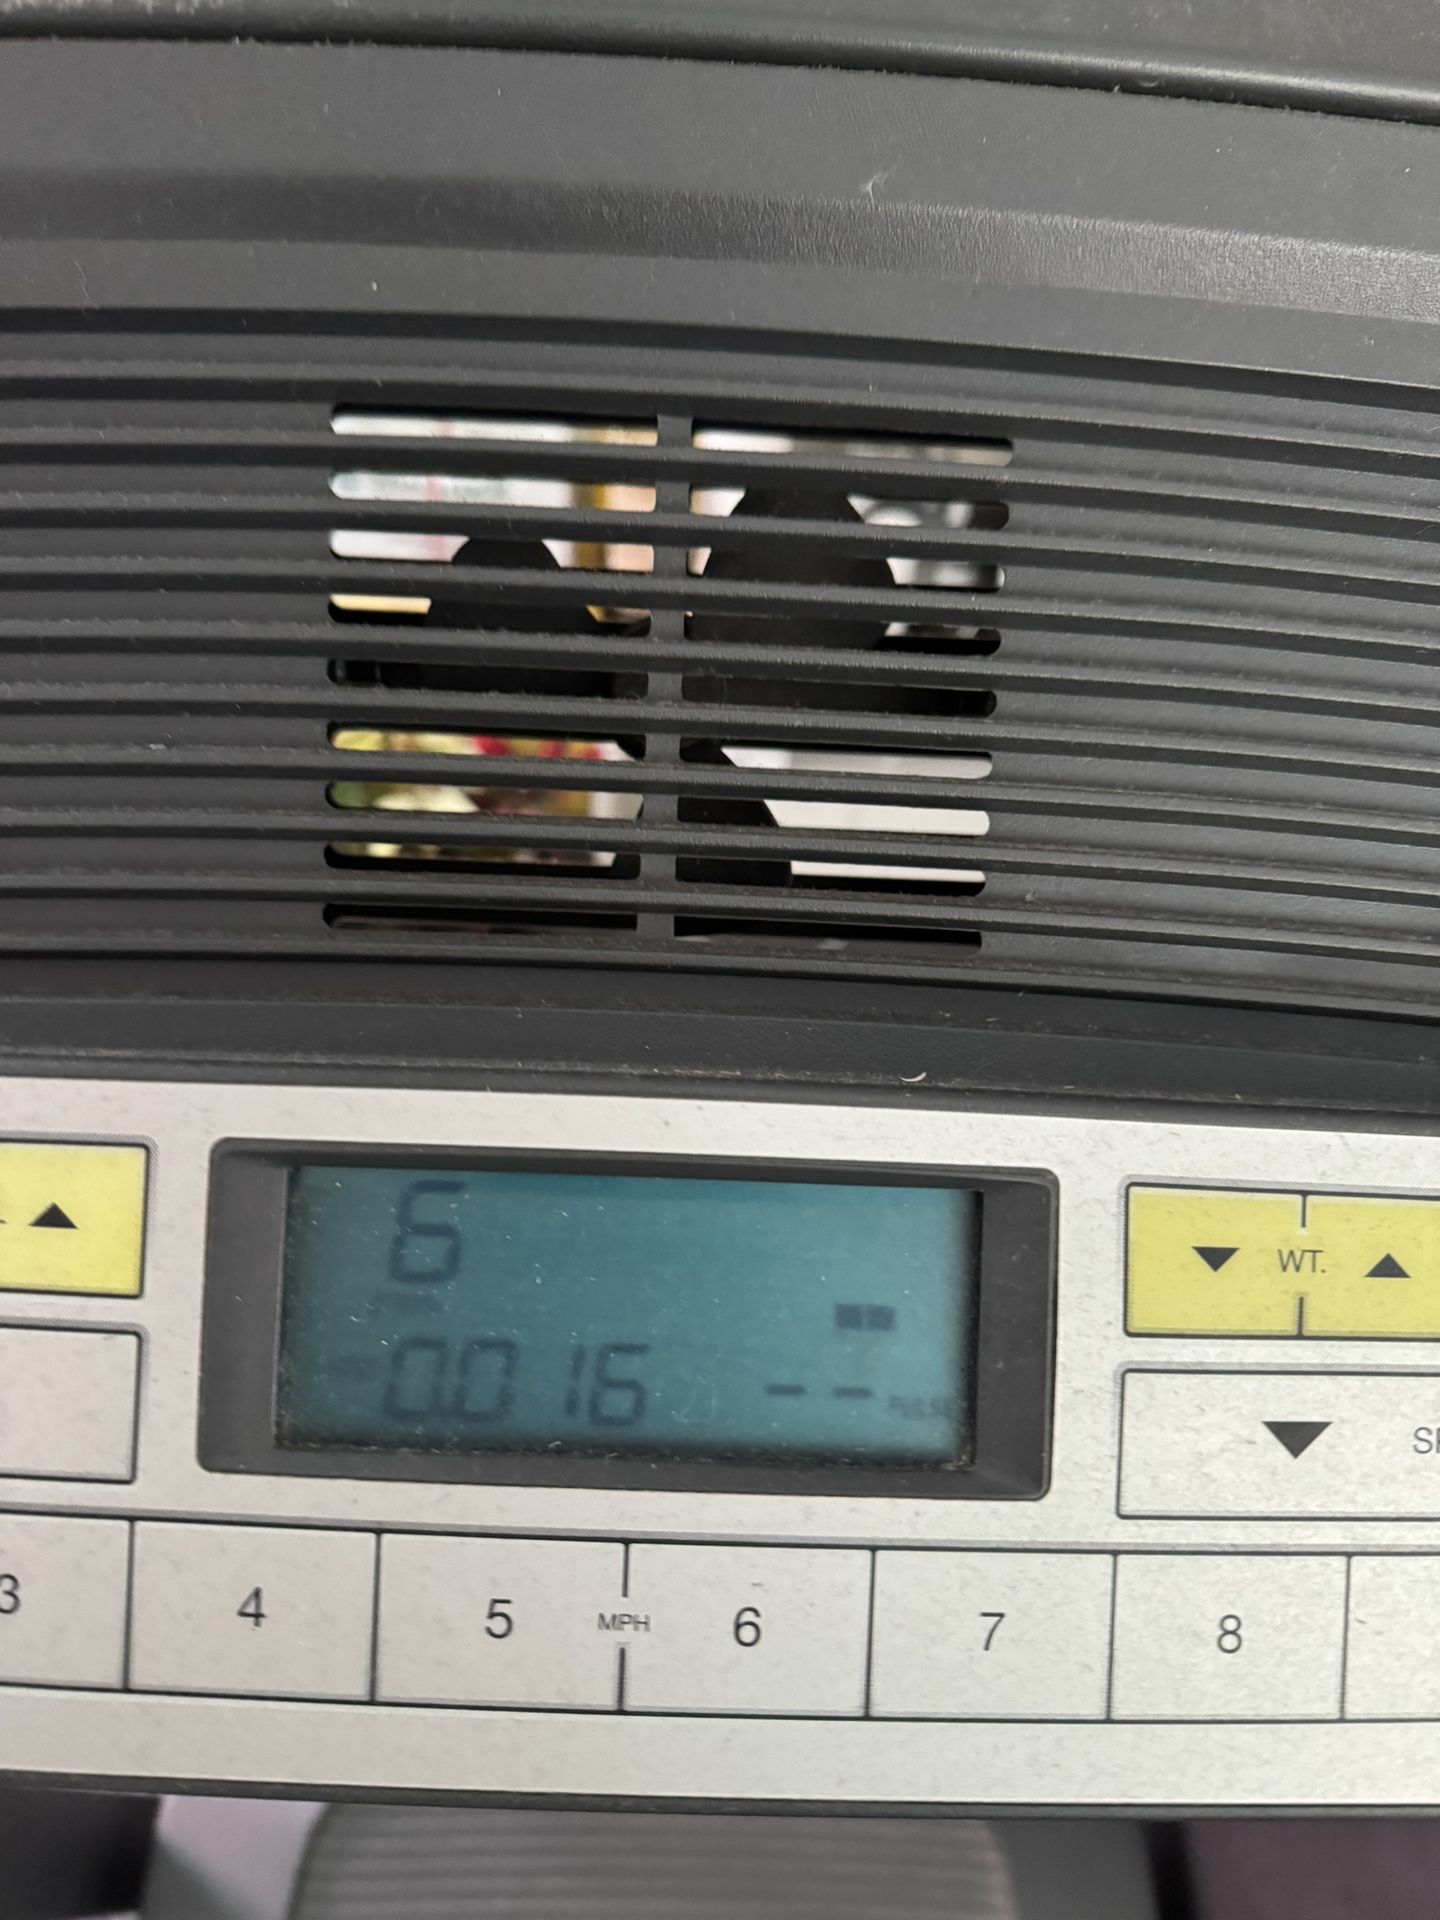 Image 15.5 S Treadmill Console Control Panel Fitness 